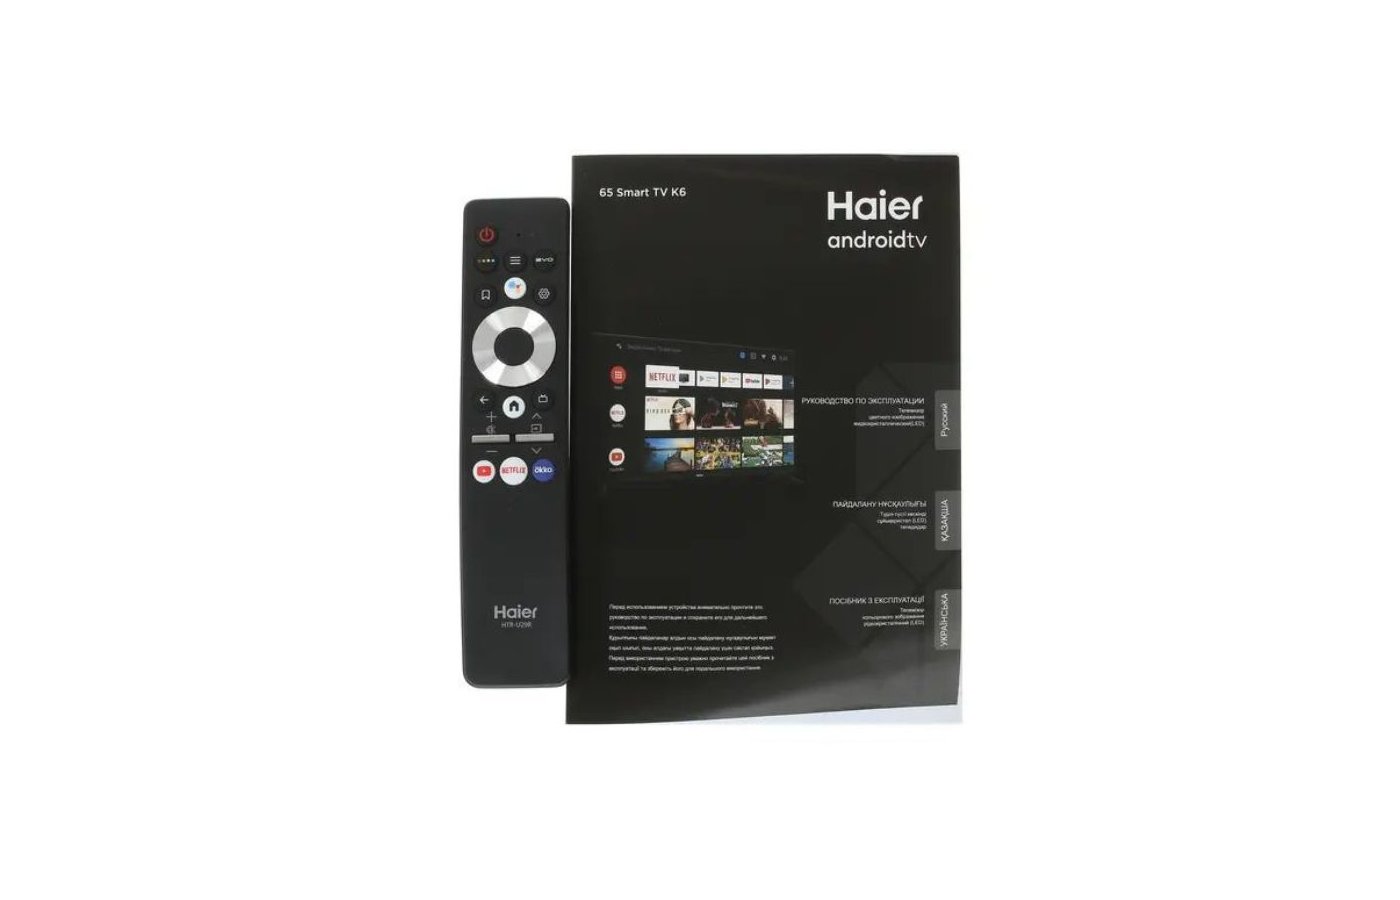 Телевизора haier 65 smart tv ax. Телевизор Haier 65 Smart TV k6. Haier 65 Smart TV AX Pro. Хаер 65 смарт ТВ s1 размер. Haier 65 Smart TV k6 цены.